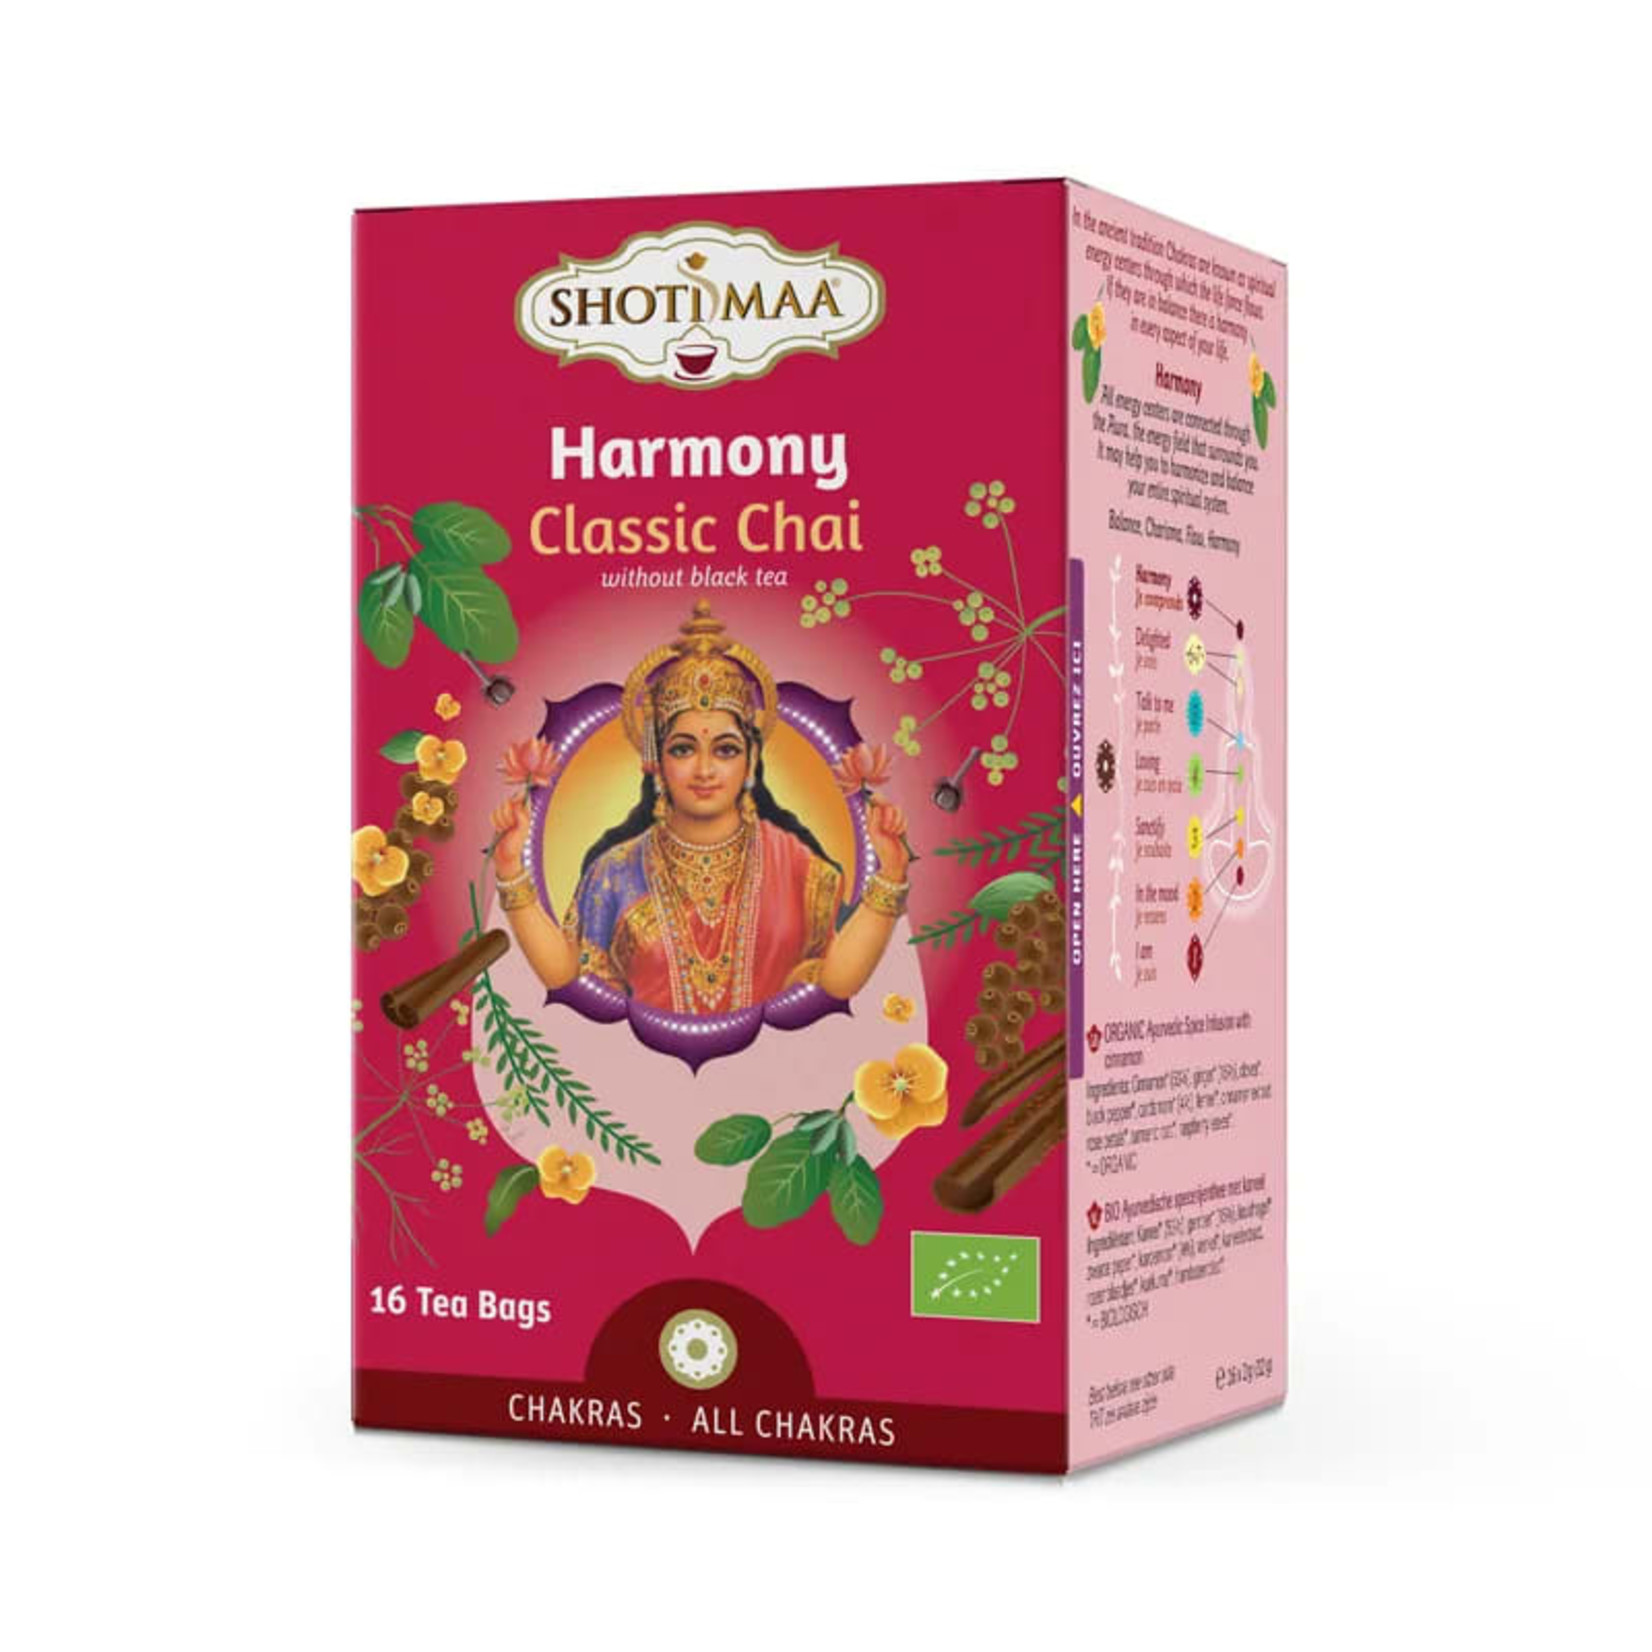 Shoti Maa Harmony classic chai